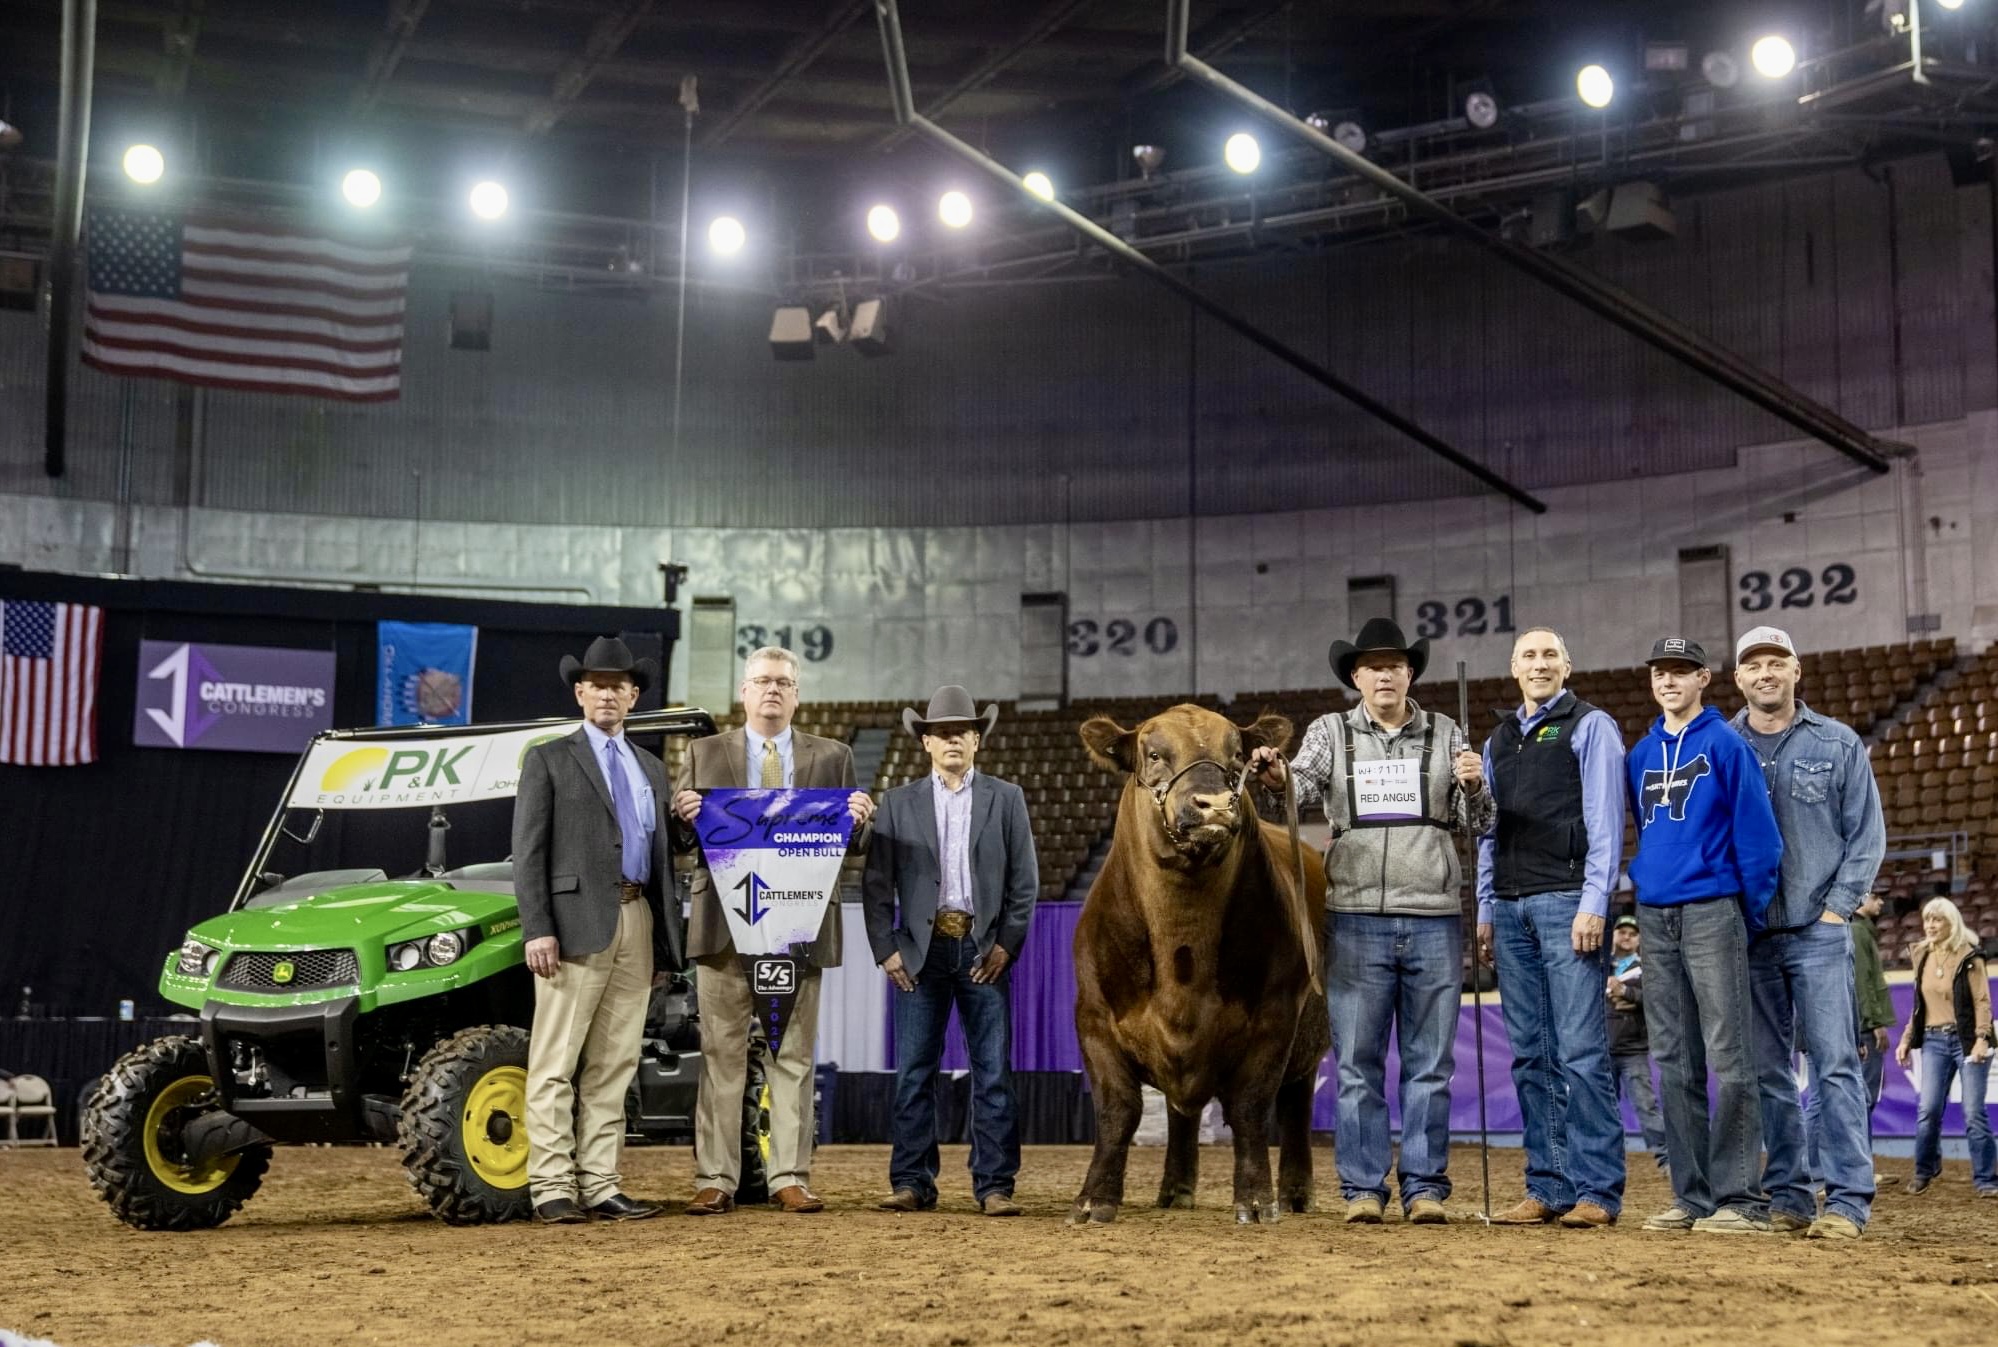 Oklahoma Breeder Takes Supreme Open Bull Championship at Third Cattlemen's Congress